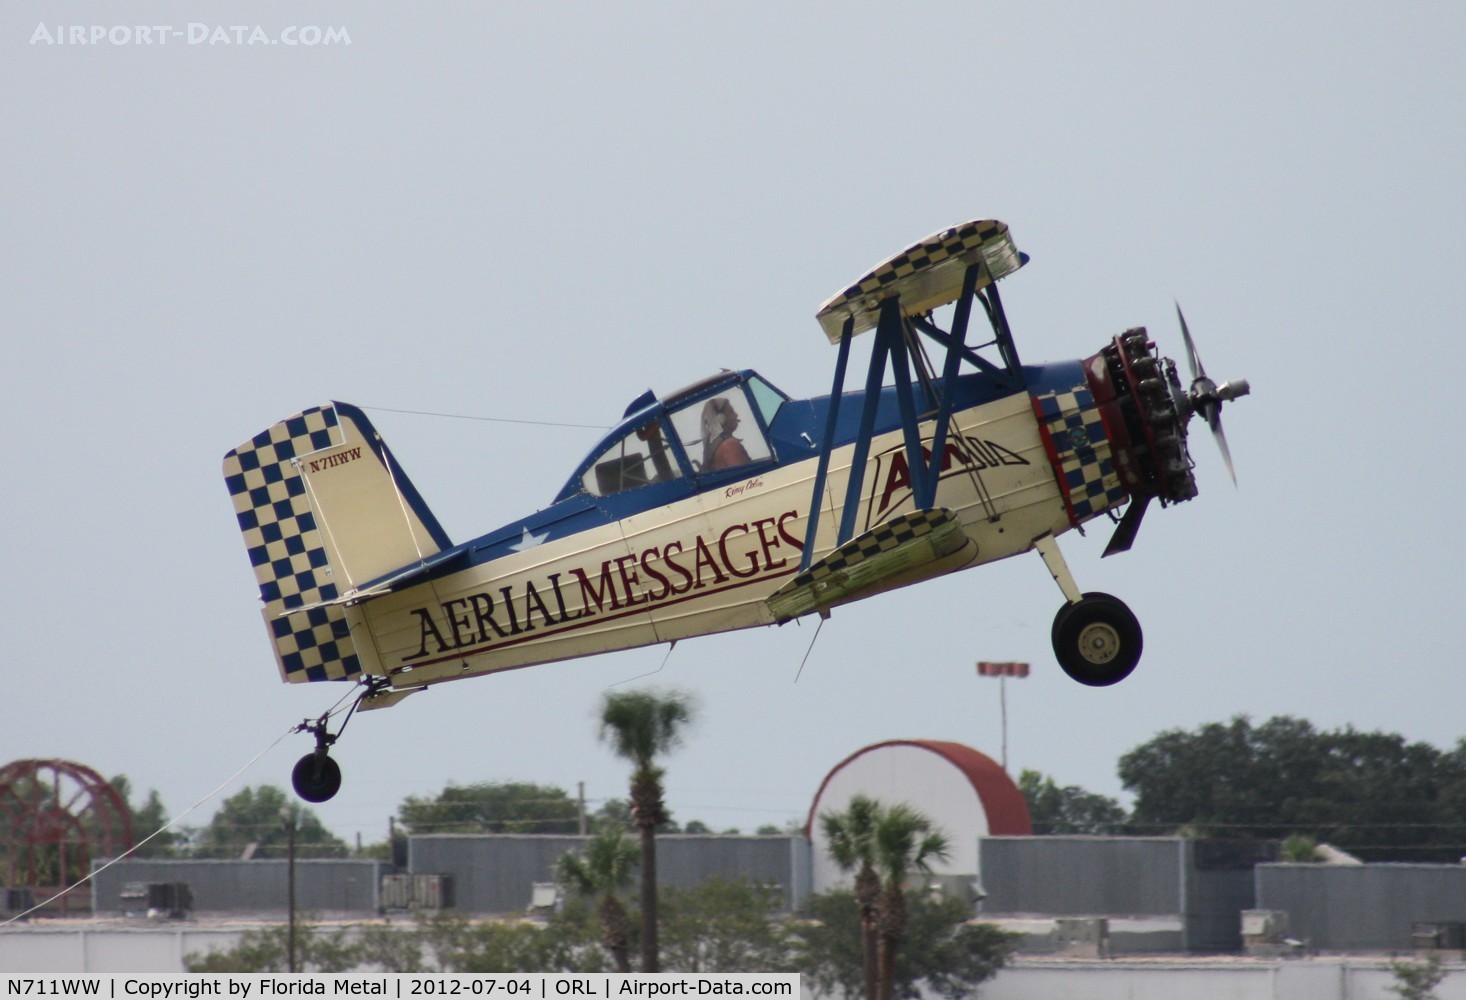 N711WW, Grumman-Schweizer G-164A C/N 1448, Aerial Messages Banner Tow Ag Cat